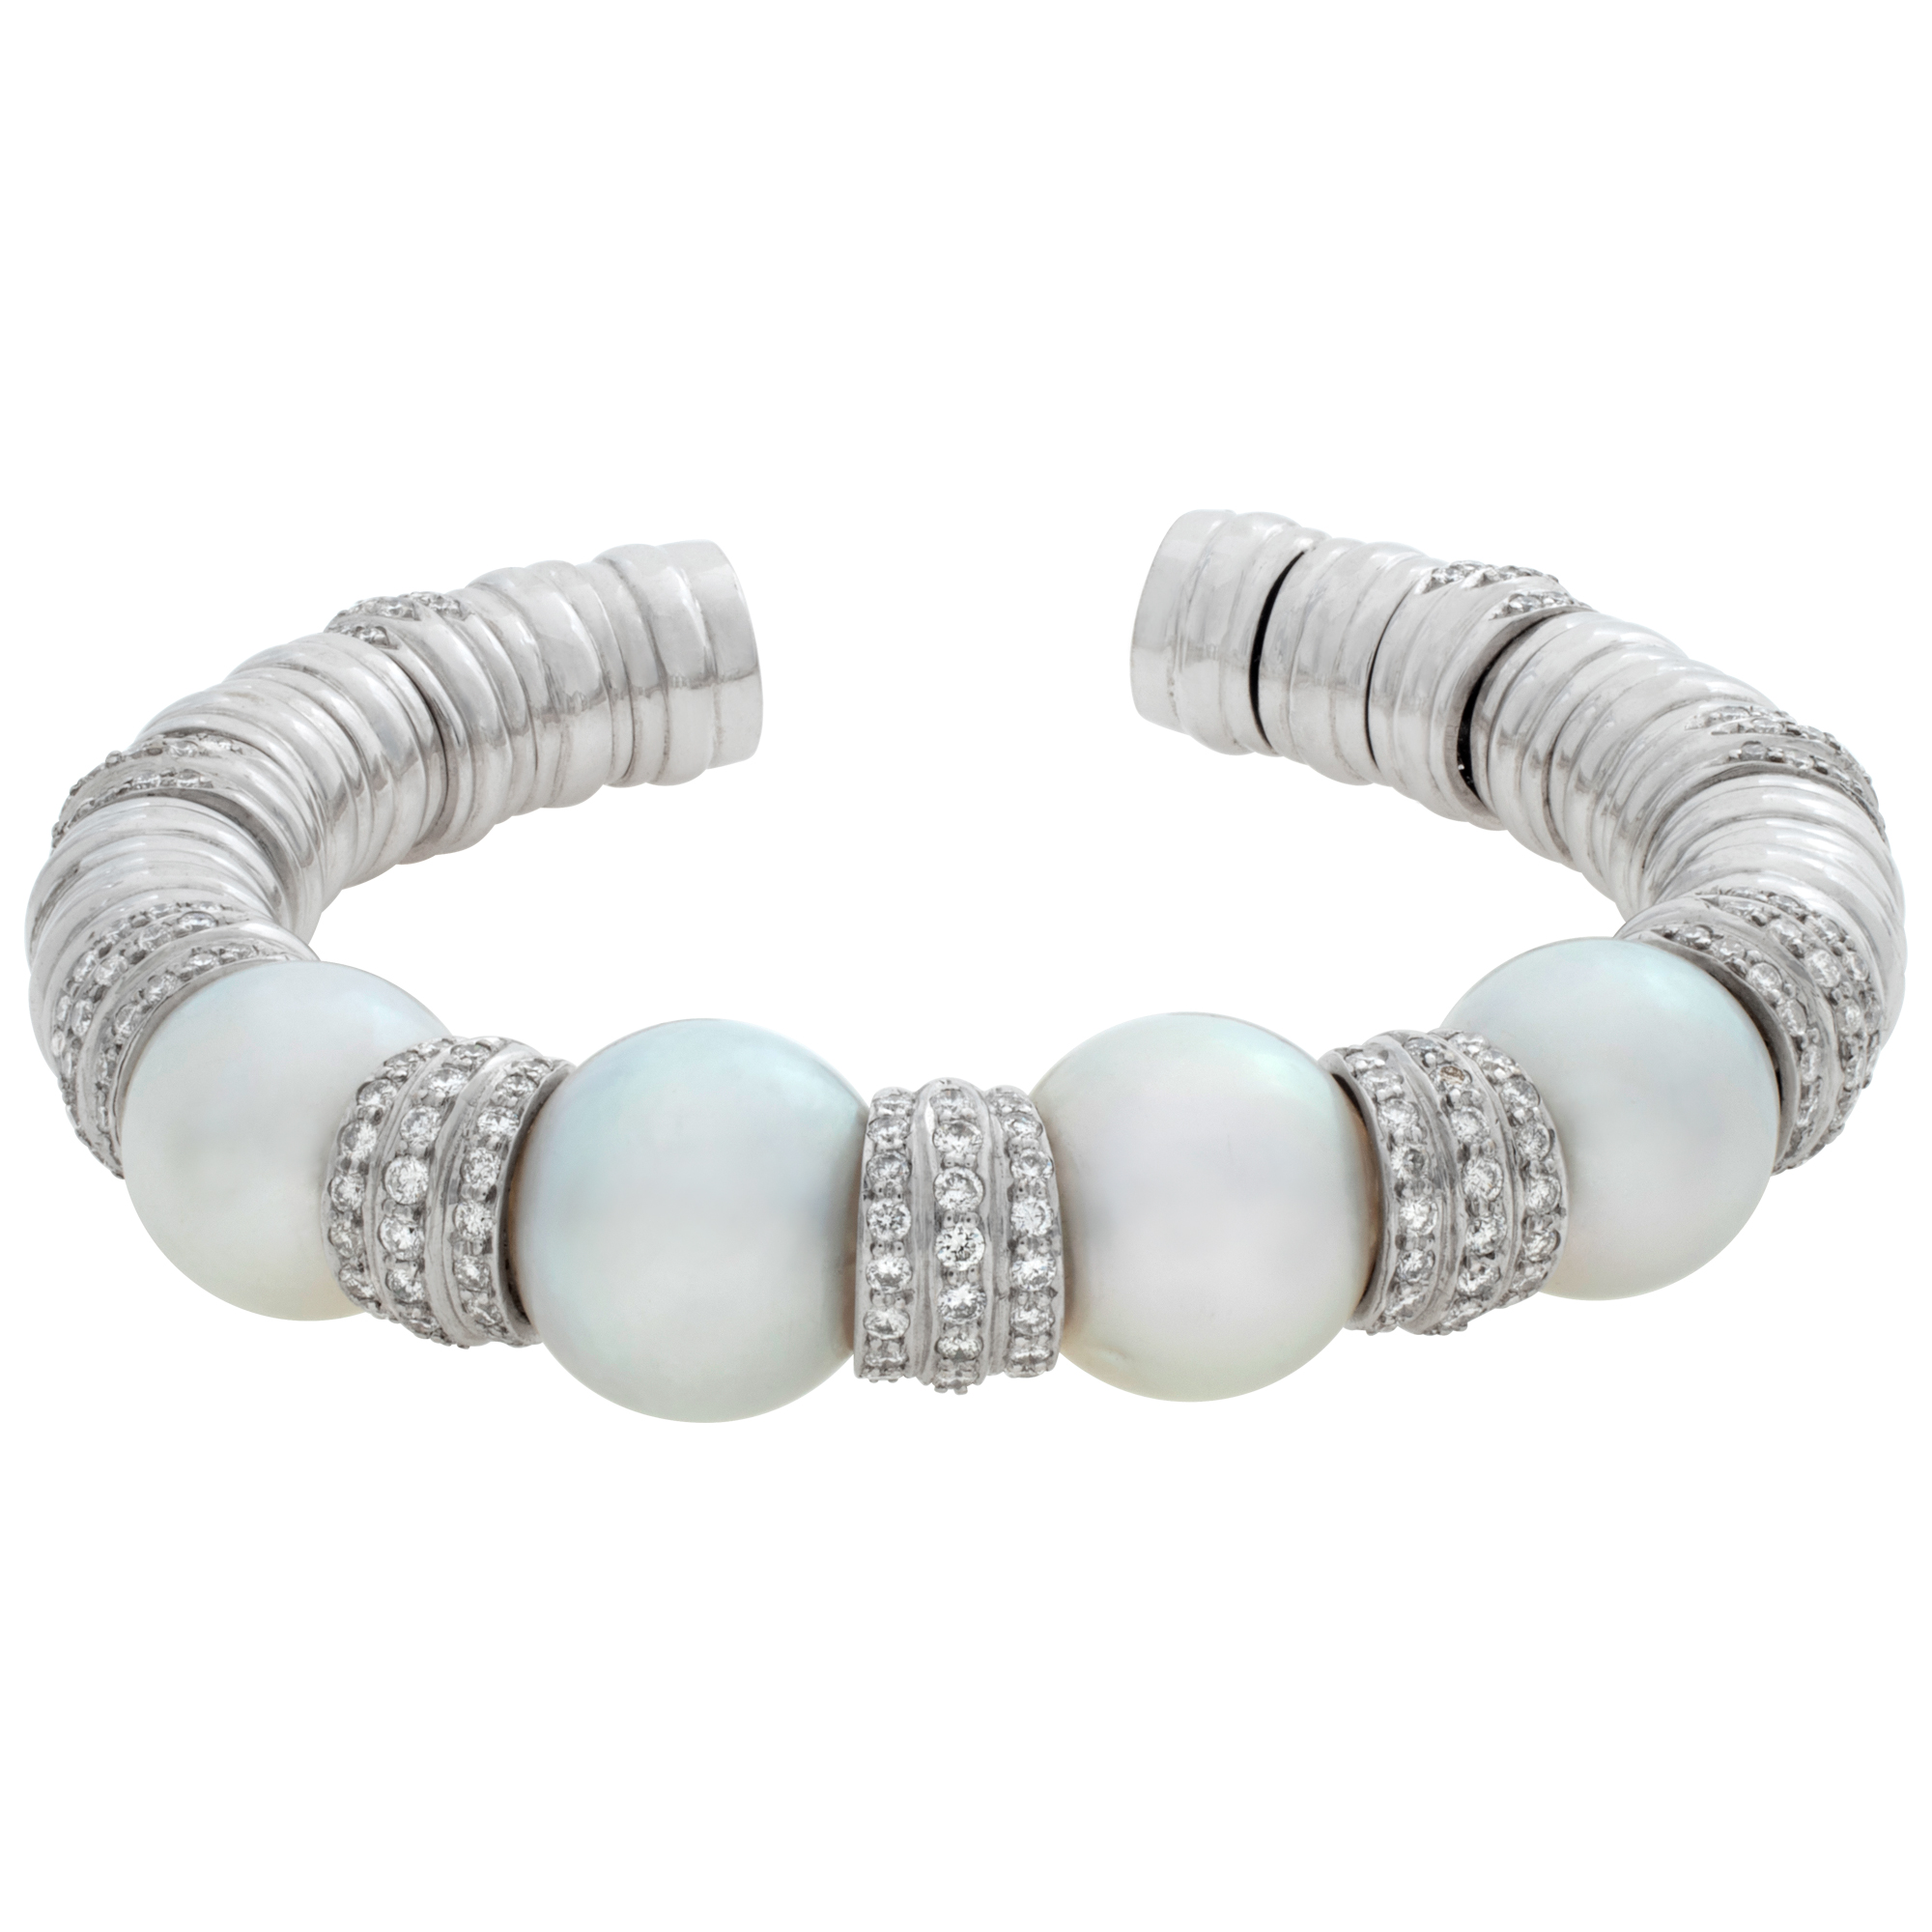 South Sea pearls (12 x 12.5mm) & diamonds (3.45 carat) cuff/bangle set in 18k white gold